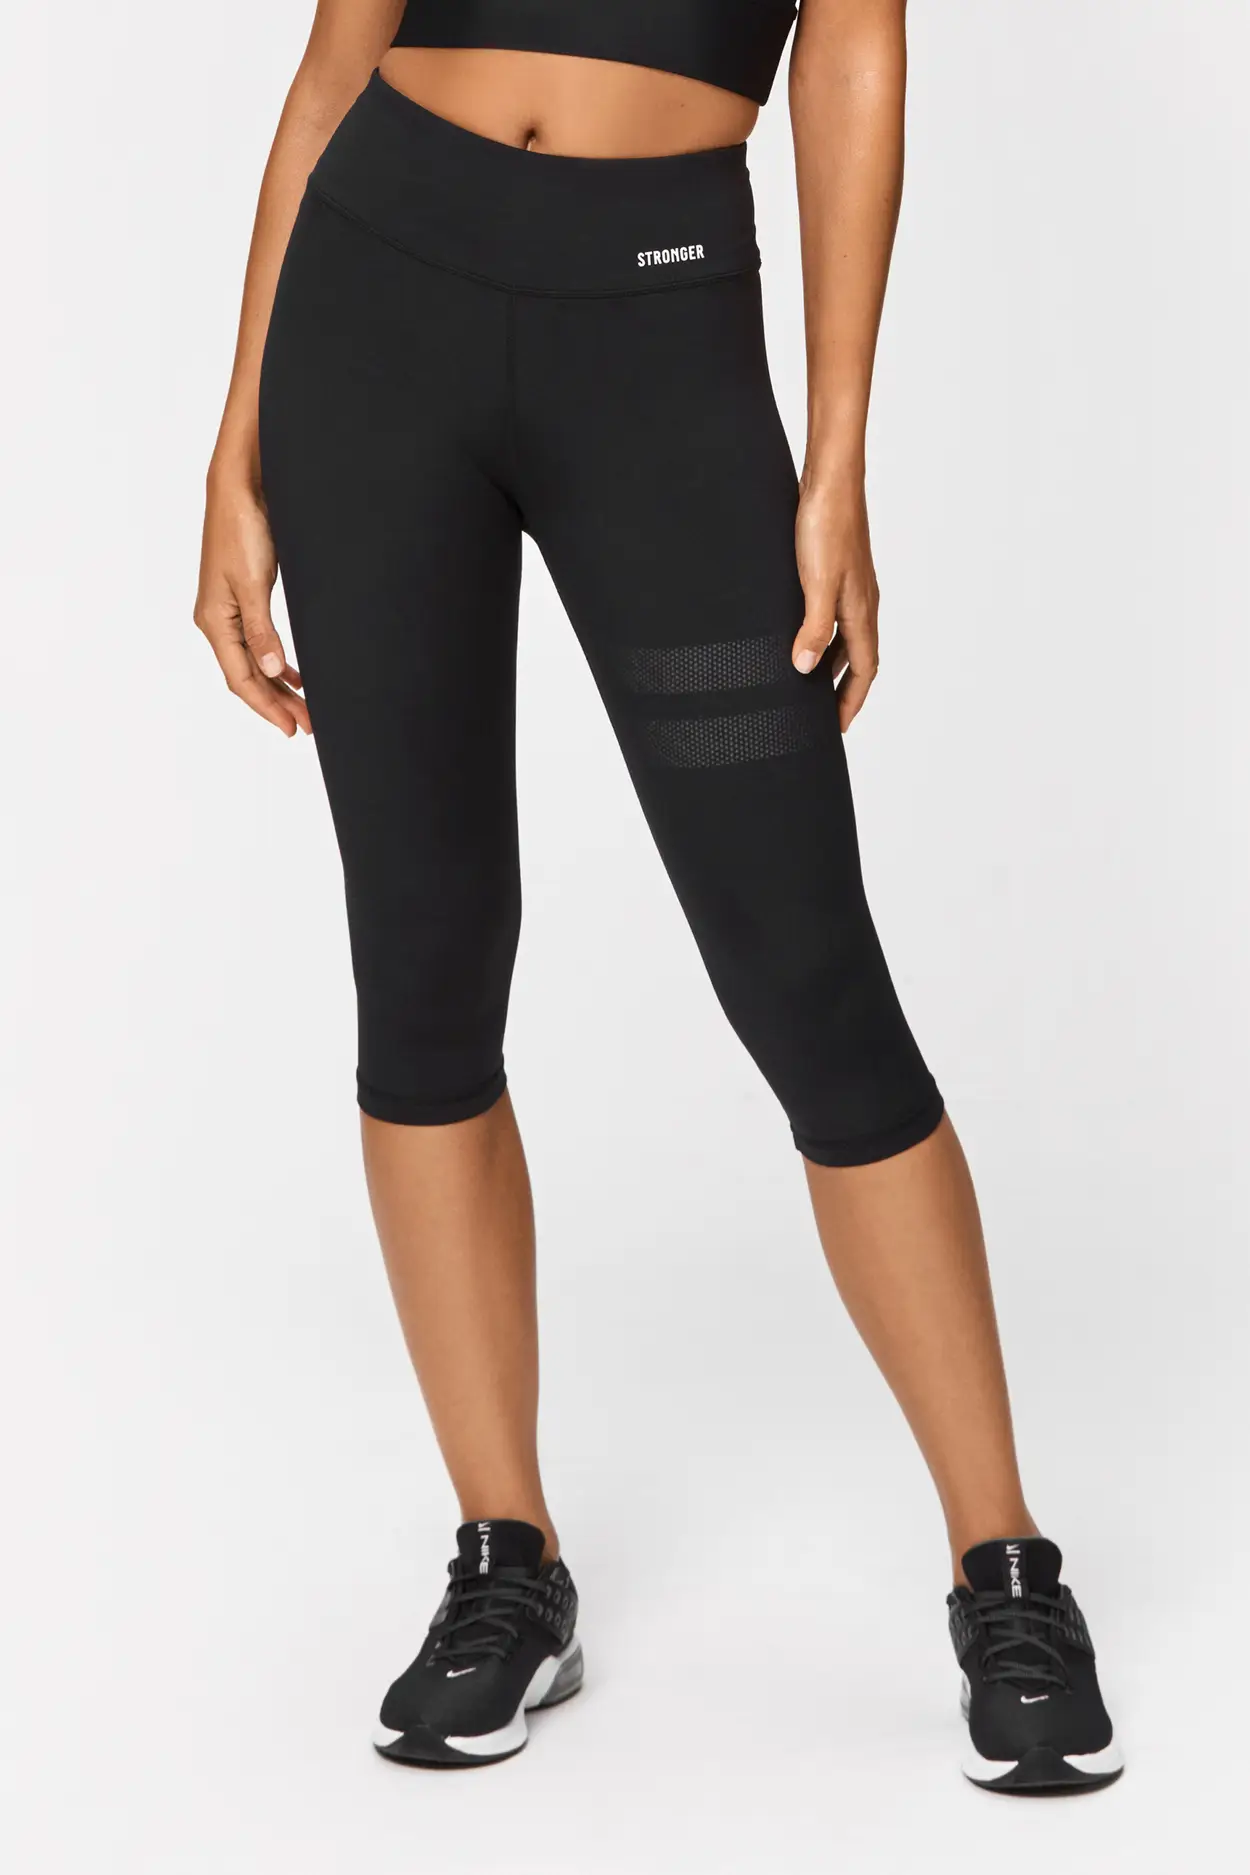 NEVER QUIT Women's Capri Leggings Workout Yoga Pants 3/4 Length Half Tights  (Large, Black)